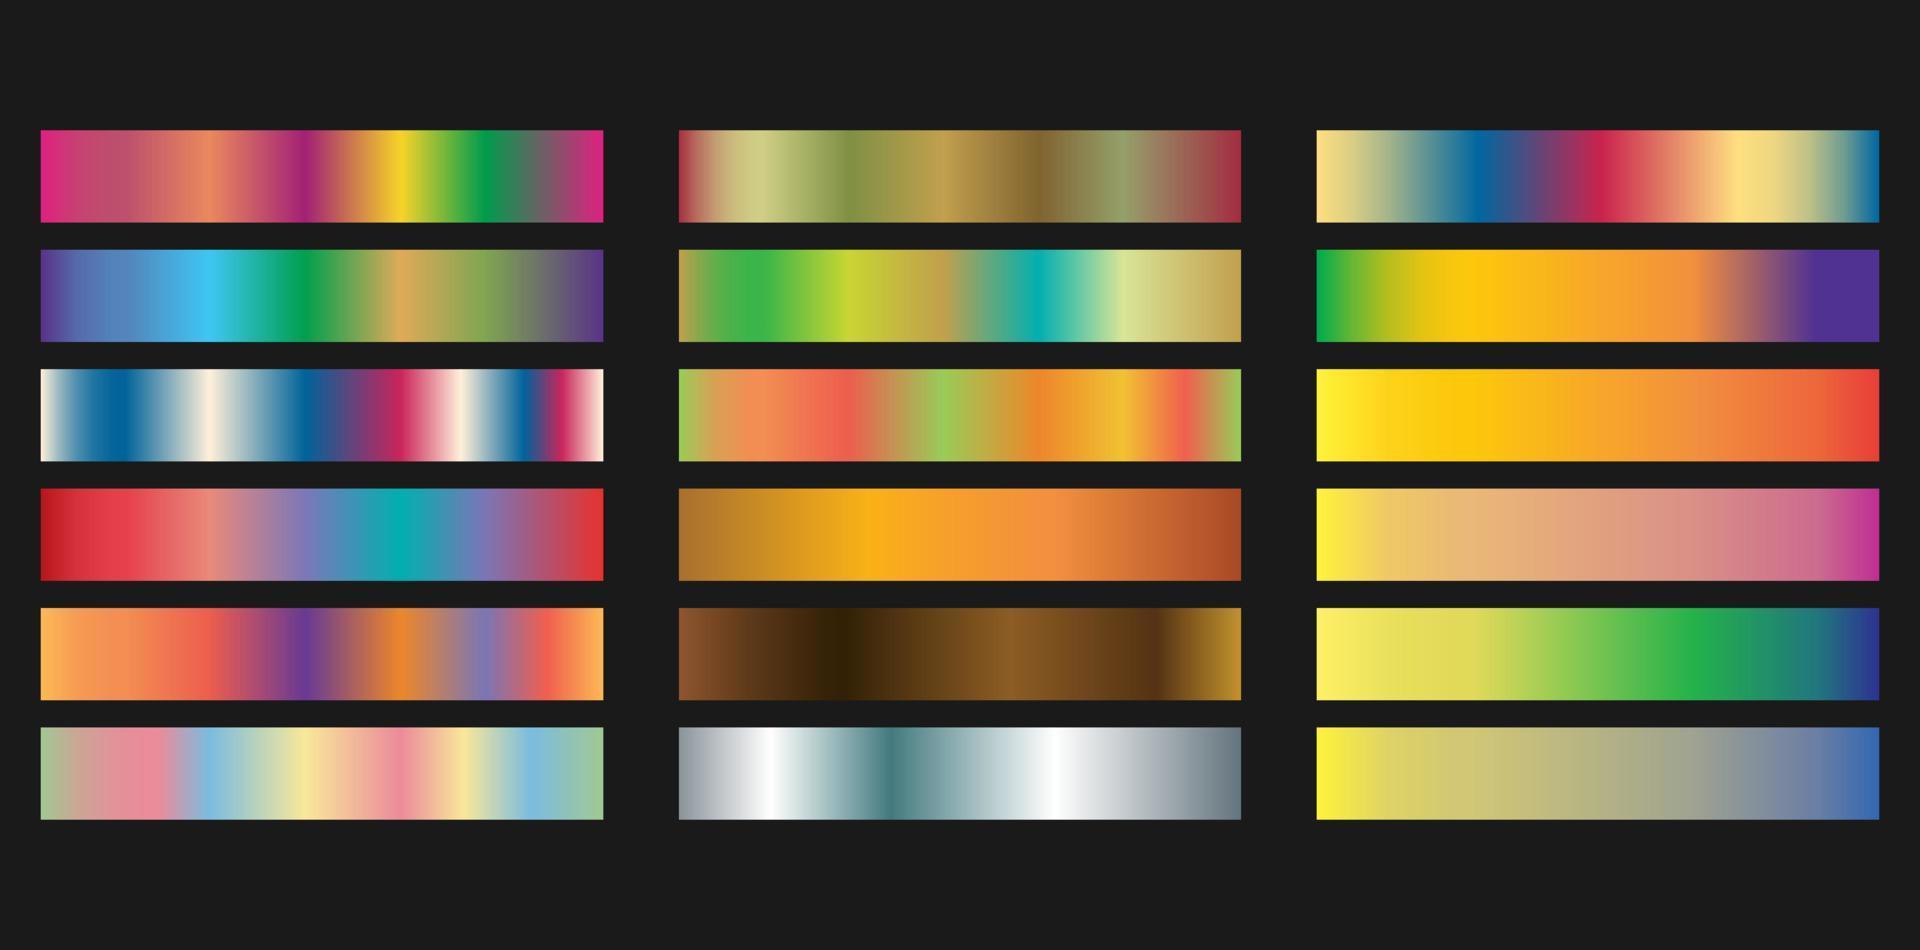 paleta de cores moderna. cores populares. tabela de cores. vetor eps 10. amostras de cores futuristas gradientes.